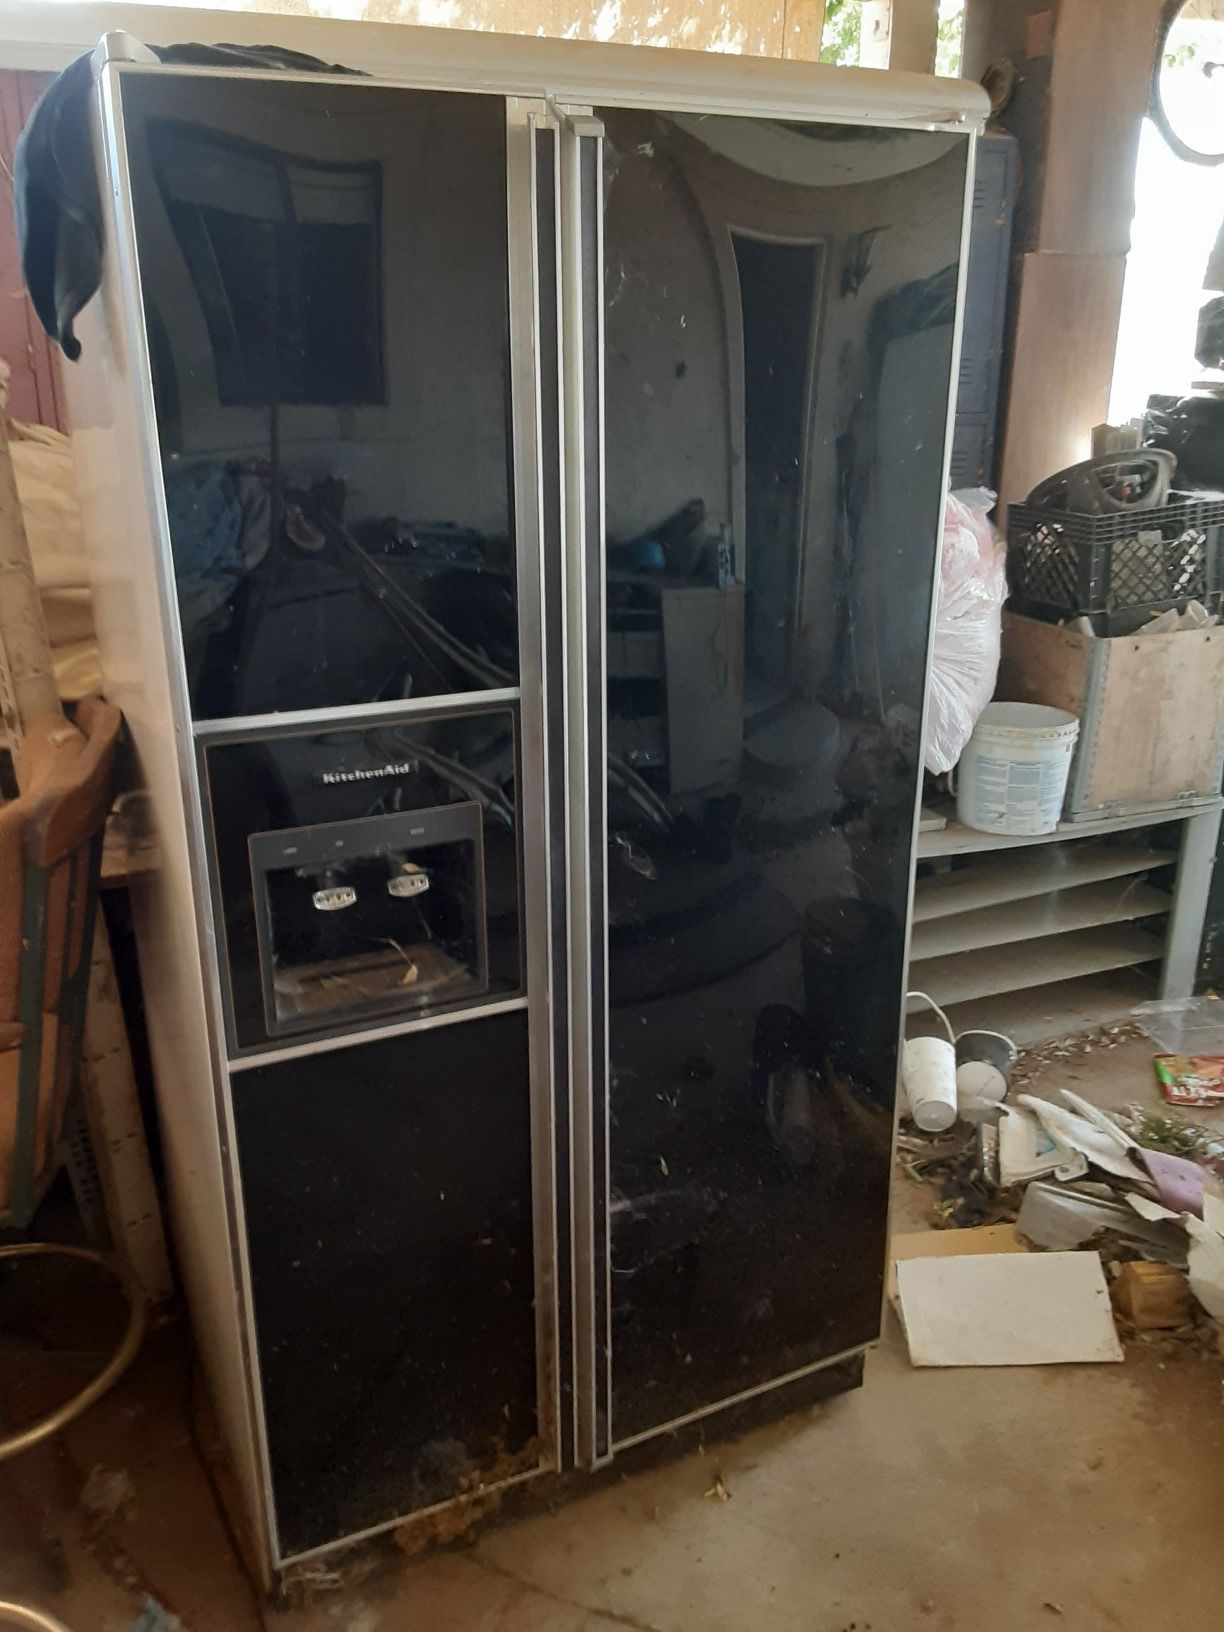 Kitchen aid big 2 door refrigerator